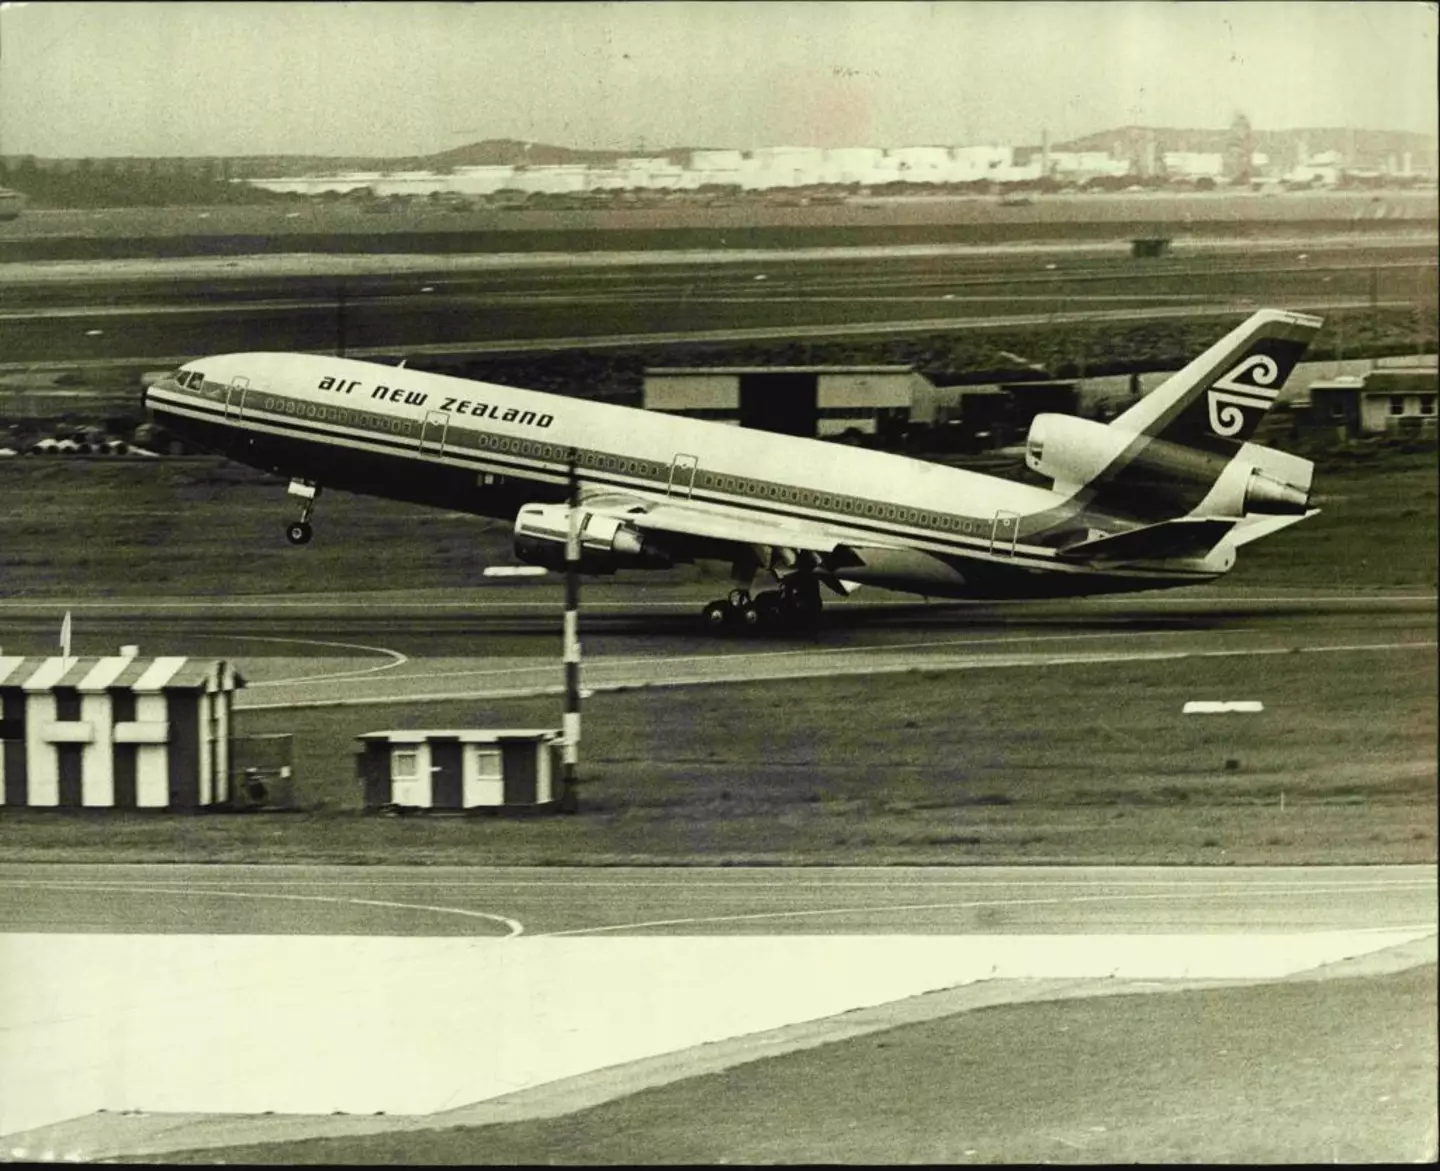 The Air New Zealand DC-10 involved in the tragic crash. (Trevor James Robert Dallen/Fairfax Media via Getty Images)